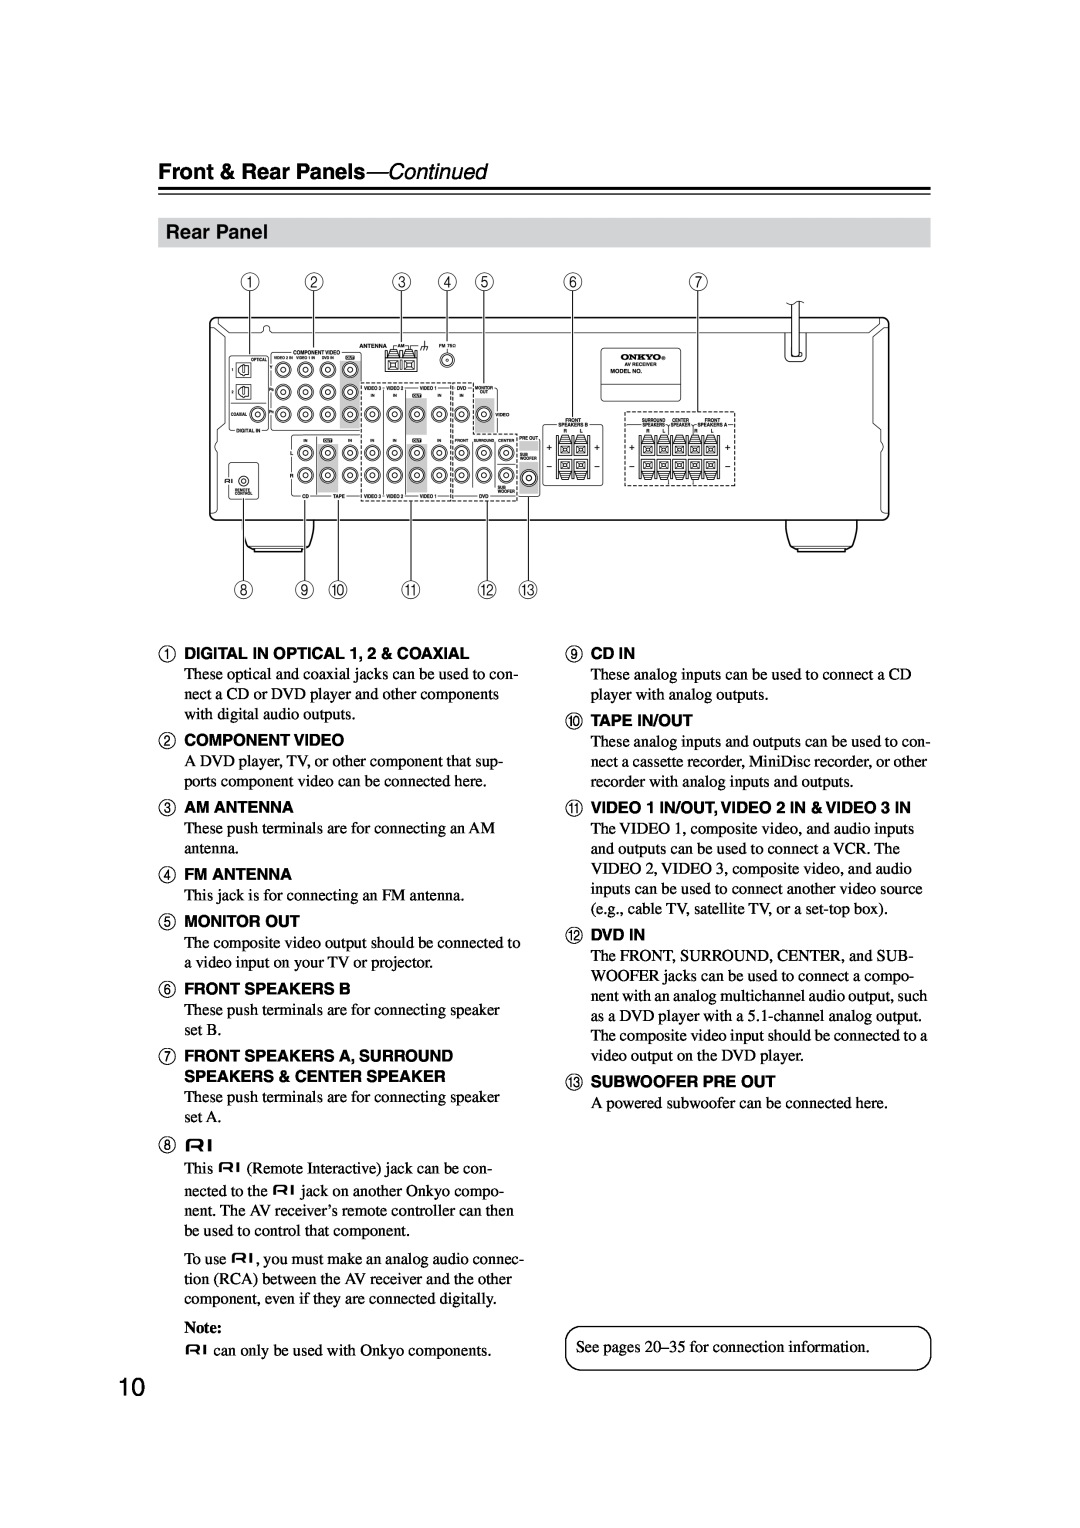 Onkyo HT-S4100 instruction manual 8 9 J K L M, Front & Rear Panels-Continued 